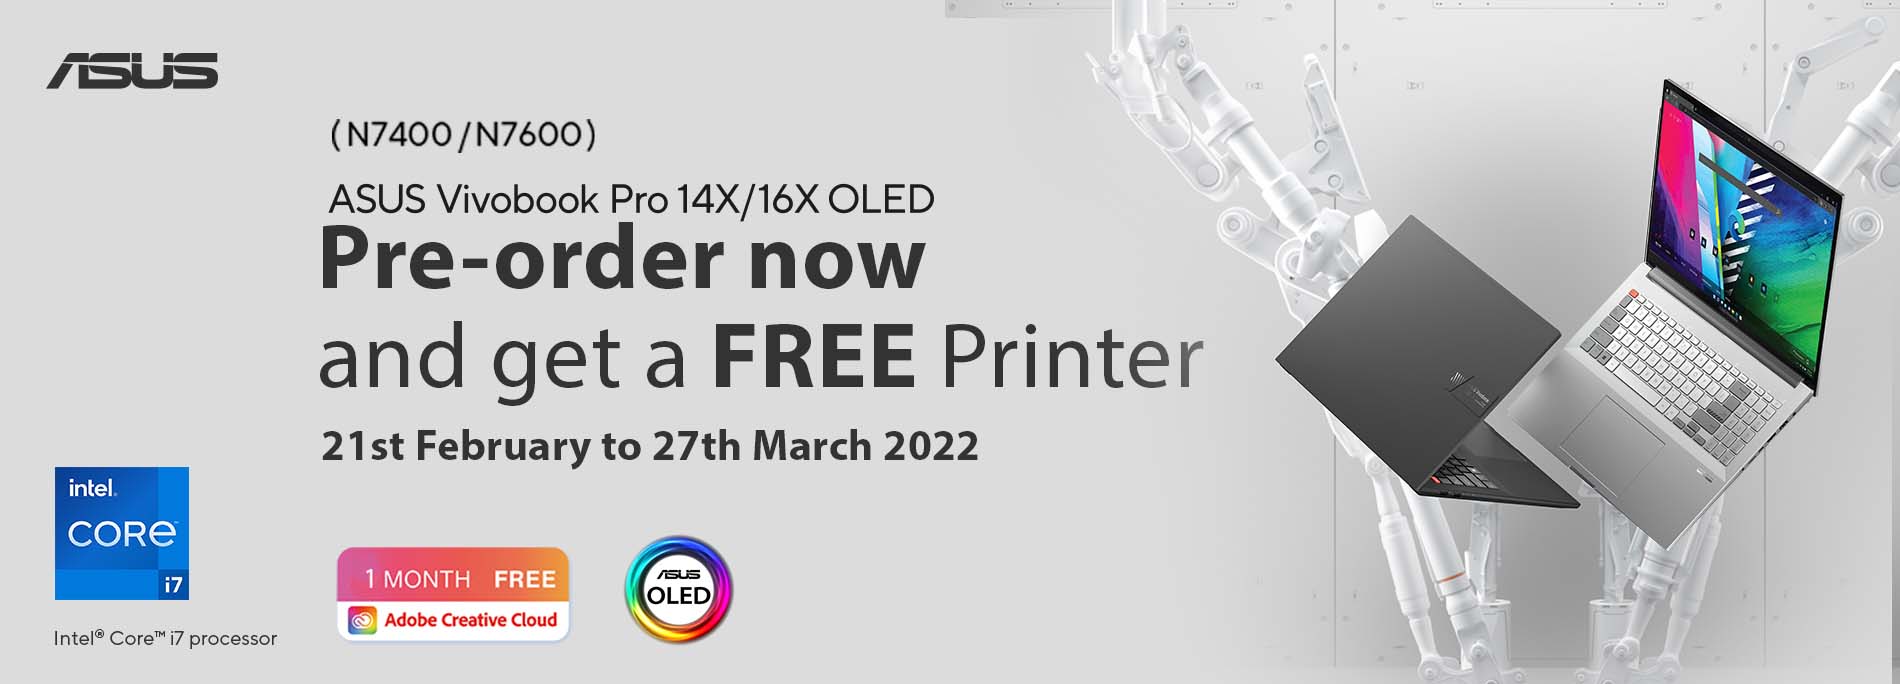 ASUS Vivobook Pro 14X/16X OLED Pre-Order